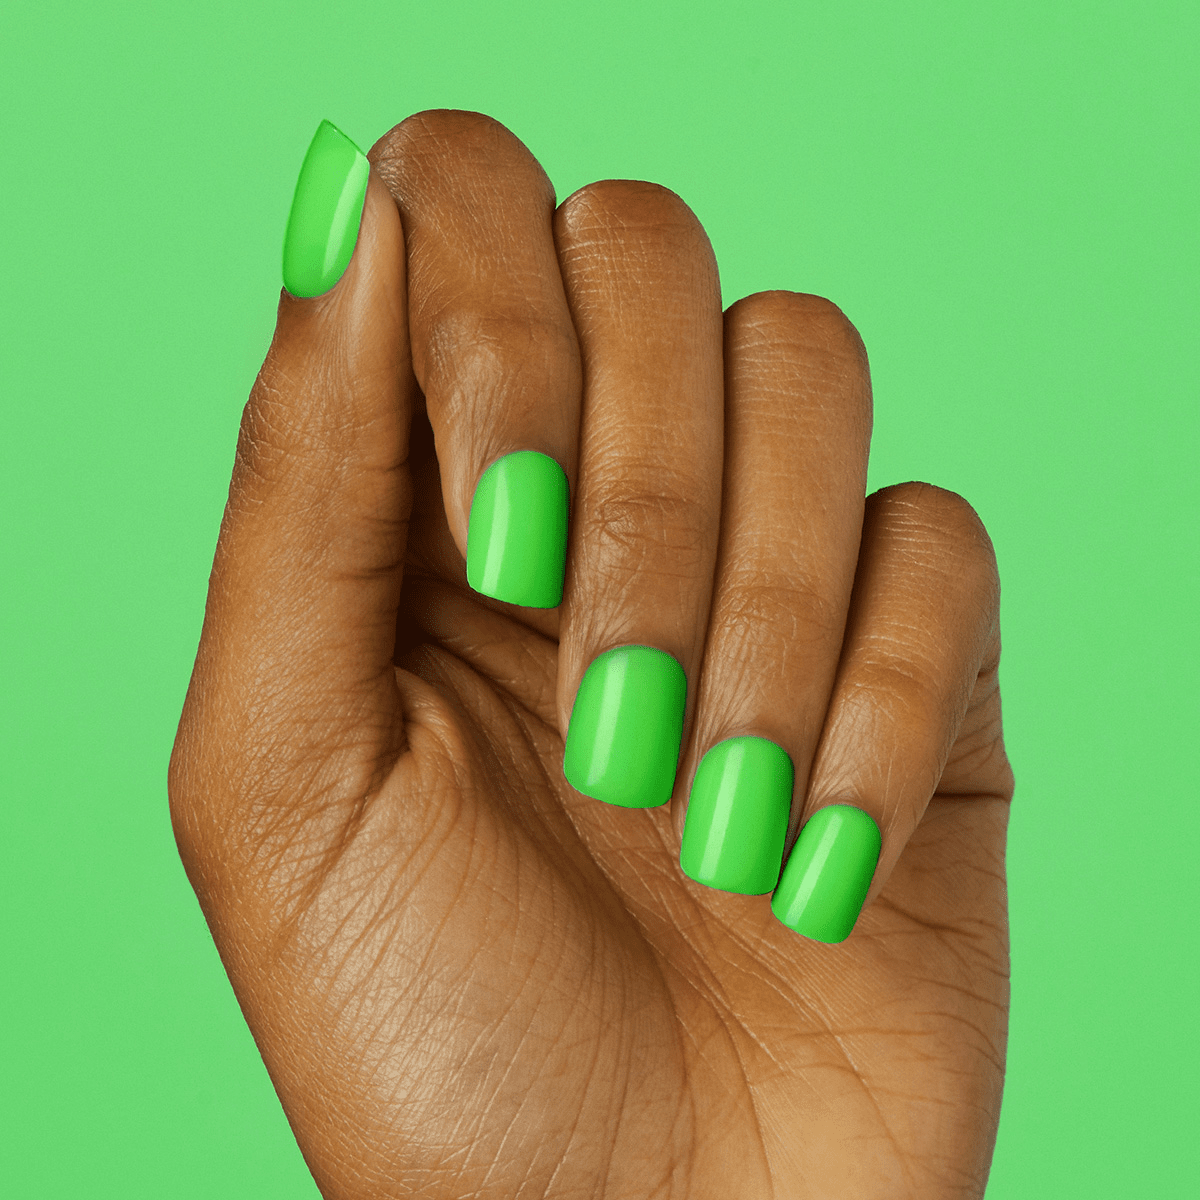 imPRESS Color Press-On Manicure - Green Light